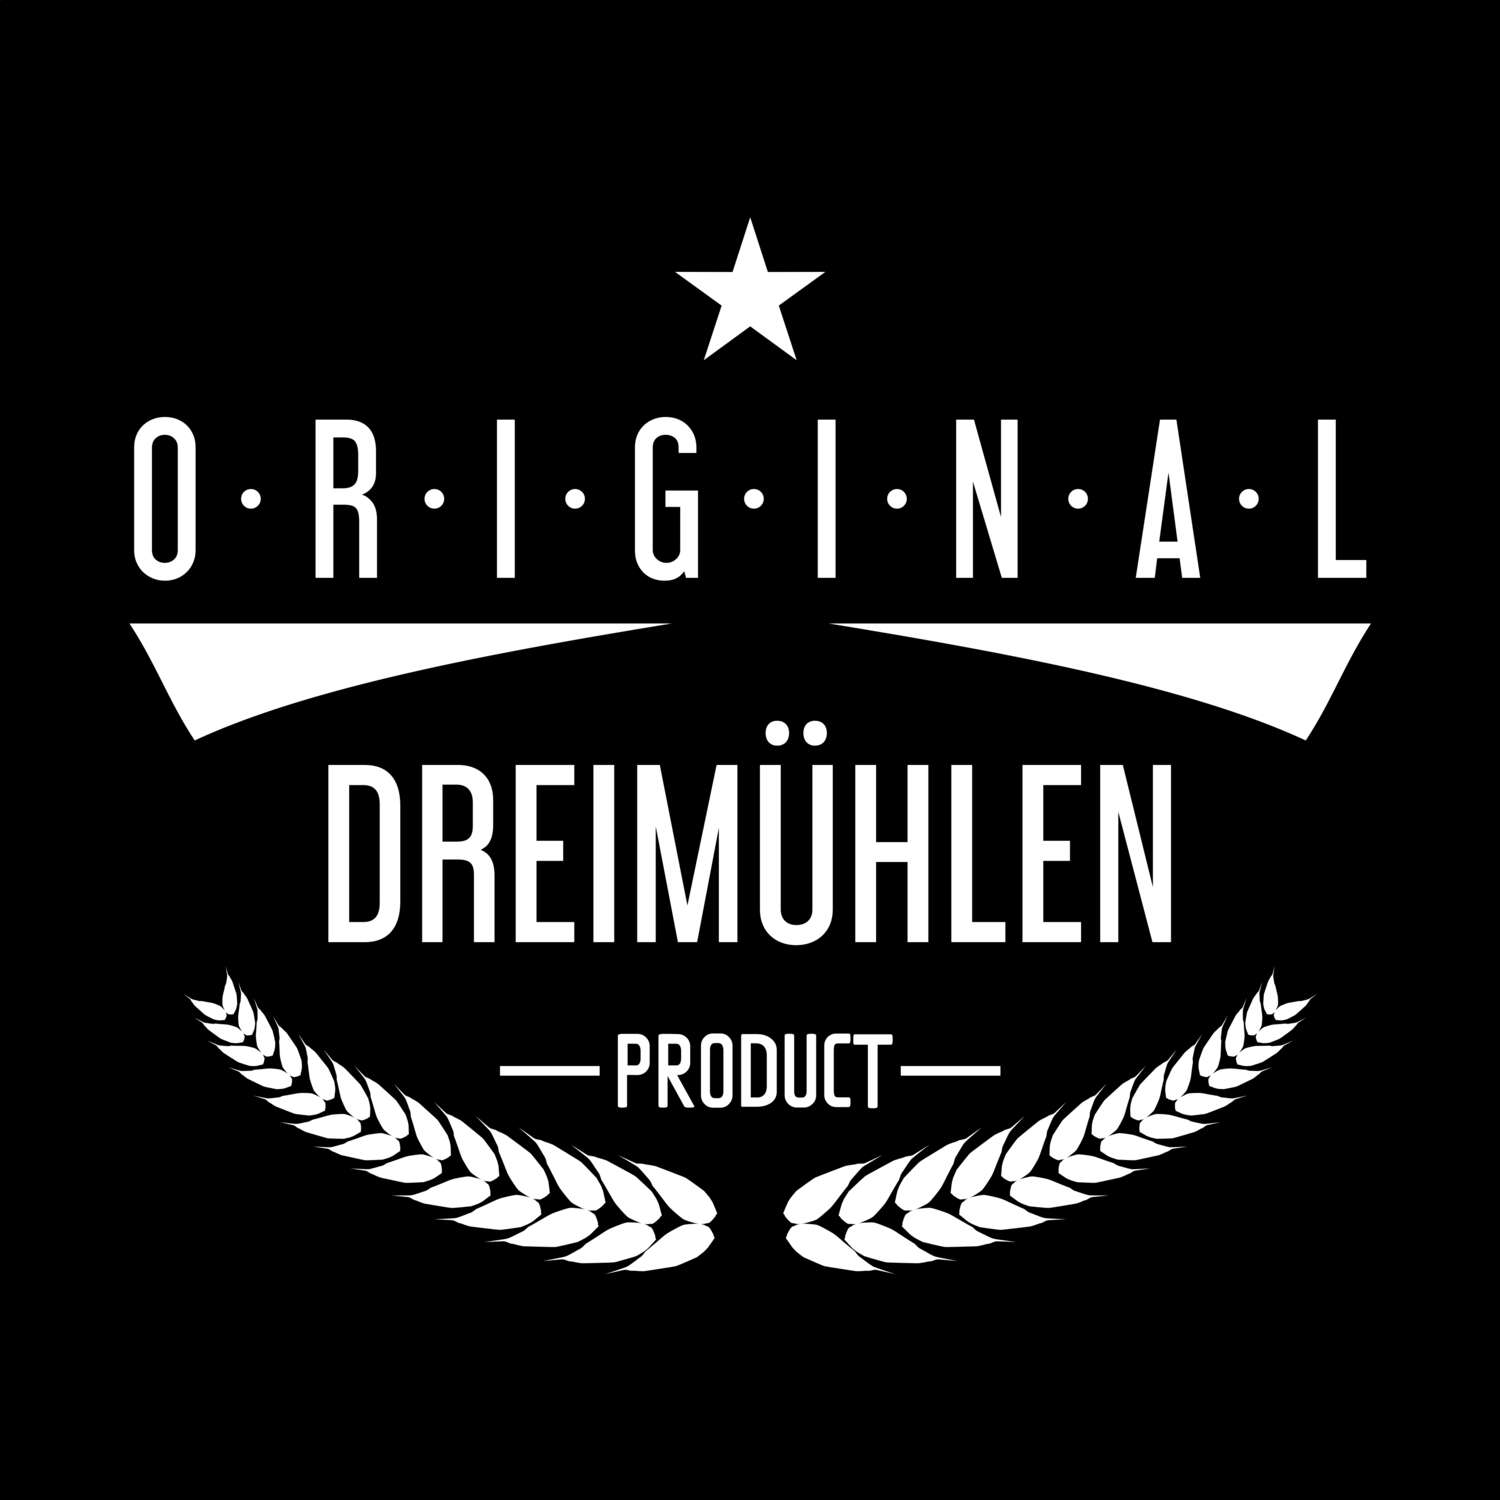 Dreimühlen T-Shirt »Original Product«